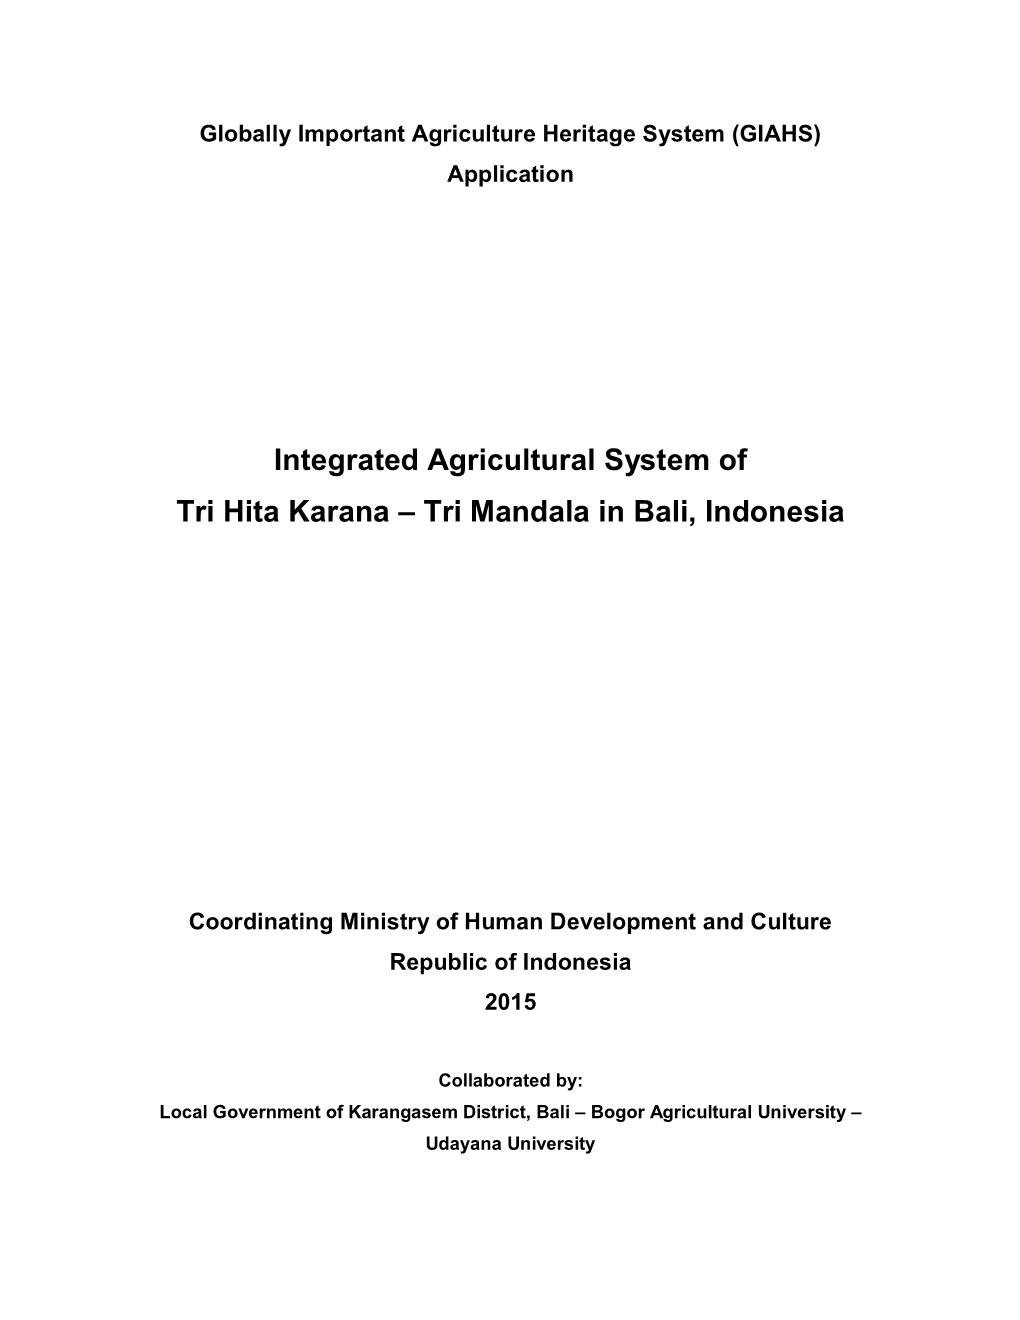 Integrated Agricultural System of Tri Hita Karana – Tri Mandala in Bali, Indonesia